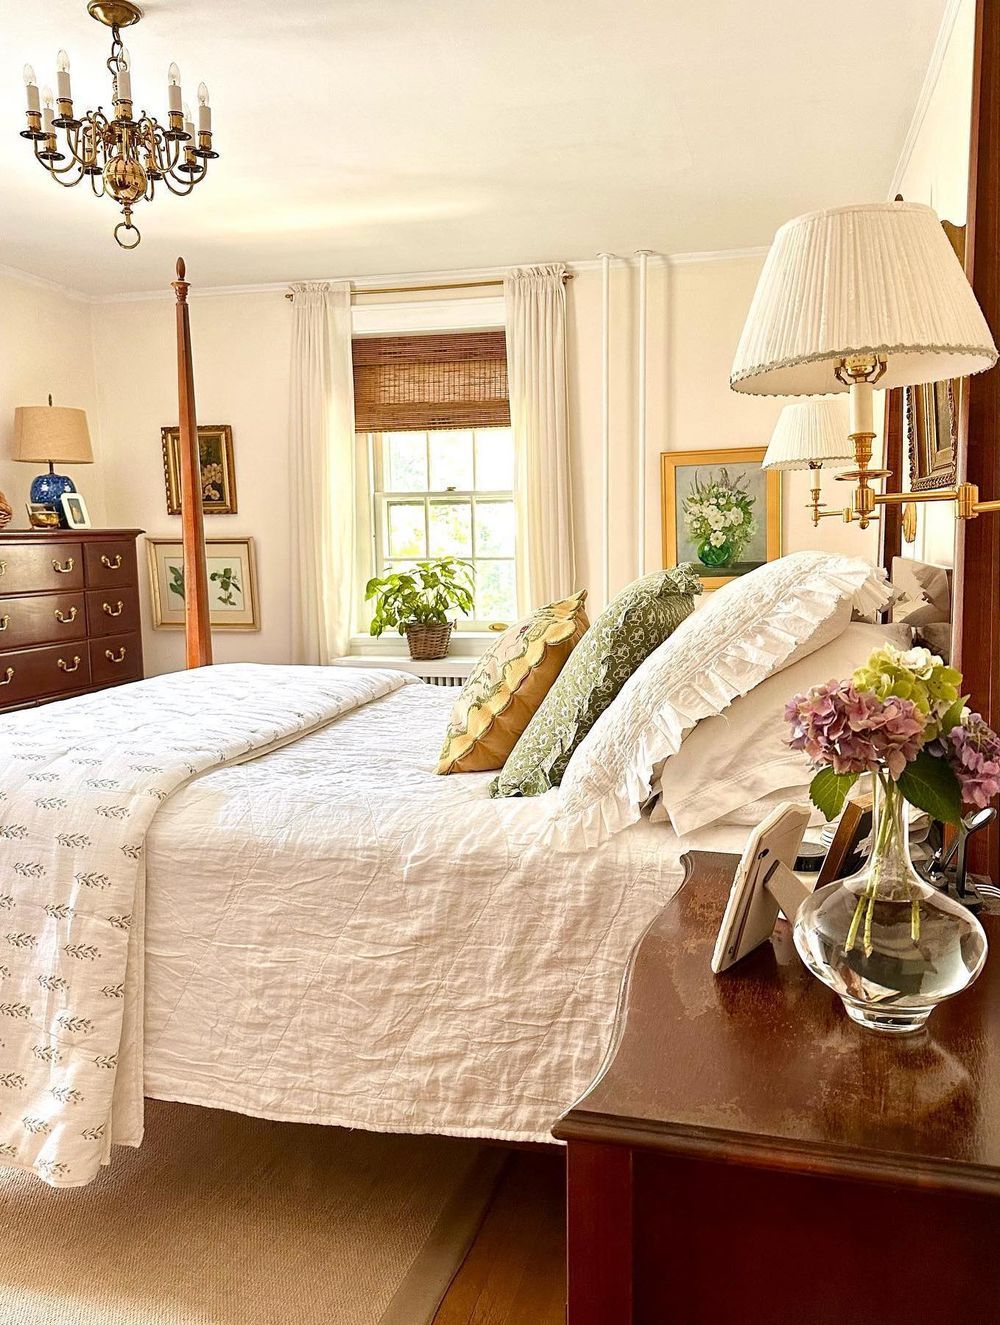 Vintage bedroom ideas Linen bedding our1925home